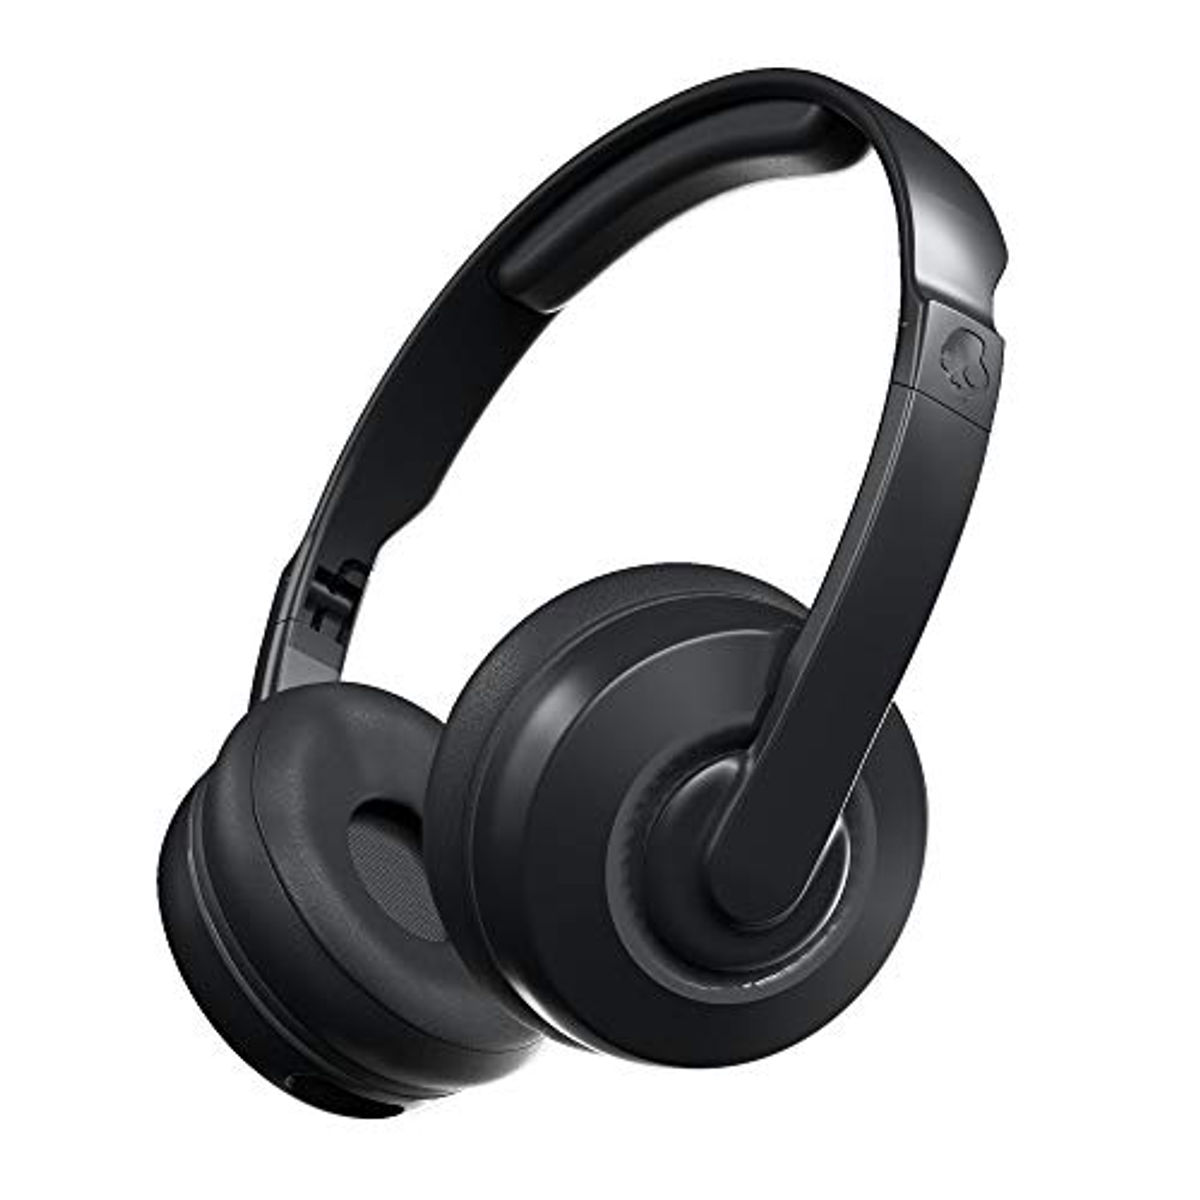 SKULLCANDY On-ear kopfhörer S5CSW-M448, Schwarz Bluetooth Bluetooth